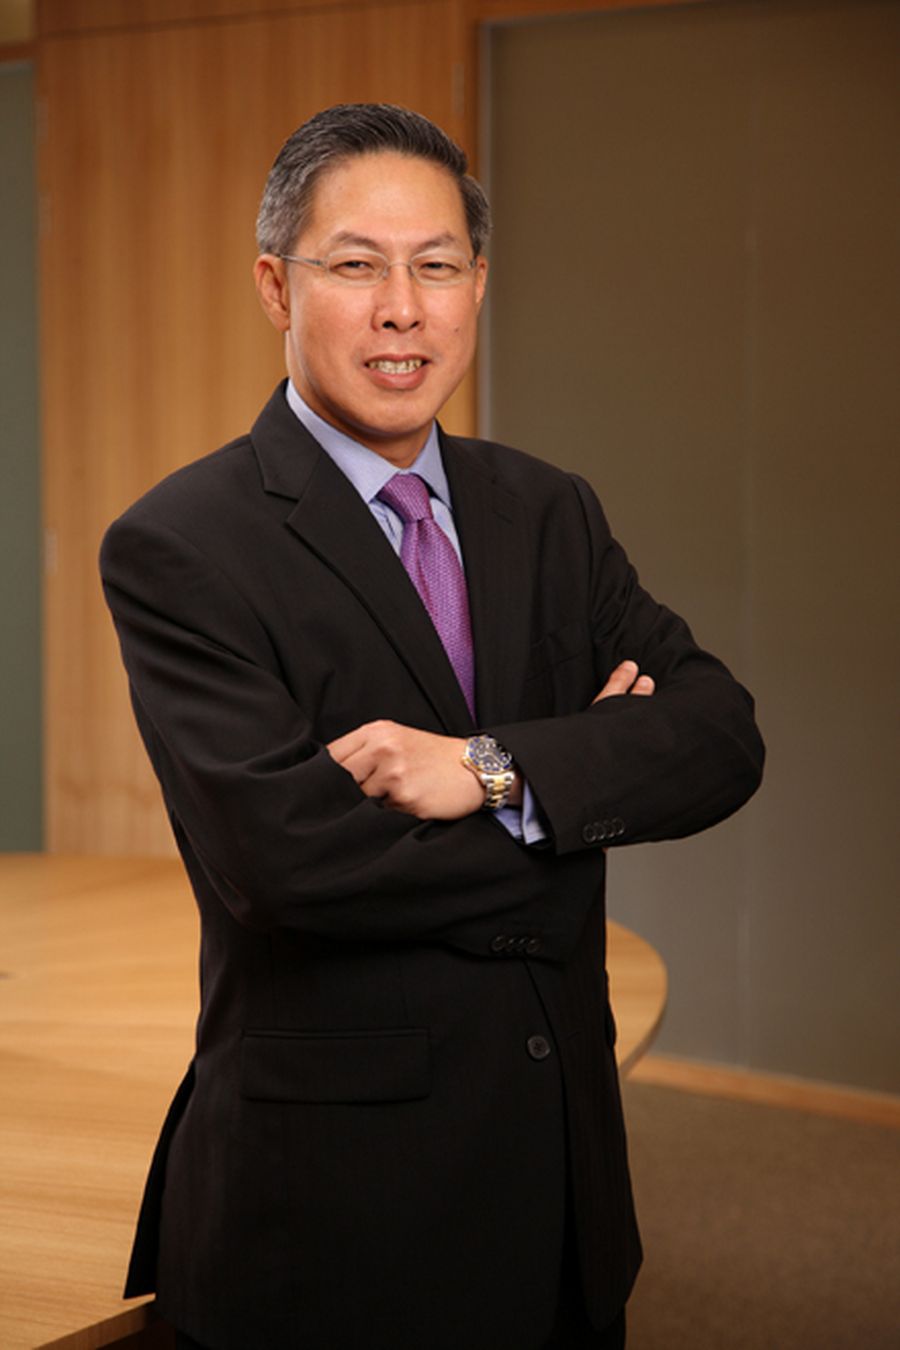 Steven Choy, President & CEO Cagamas Bhd